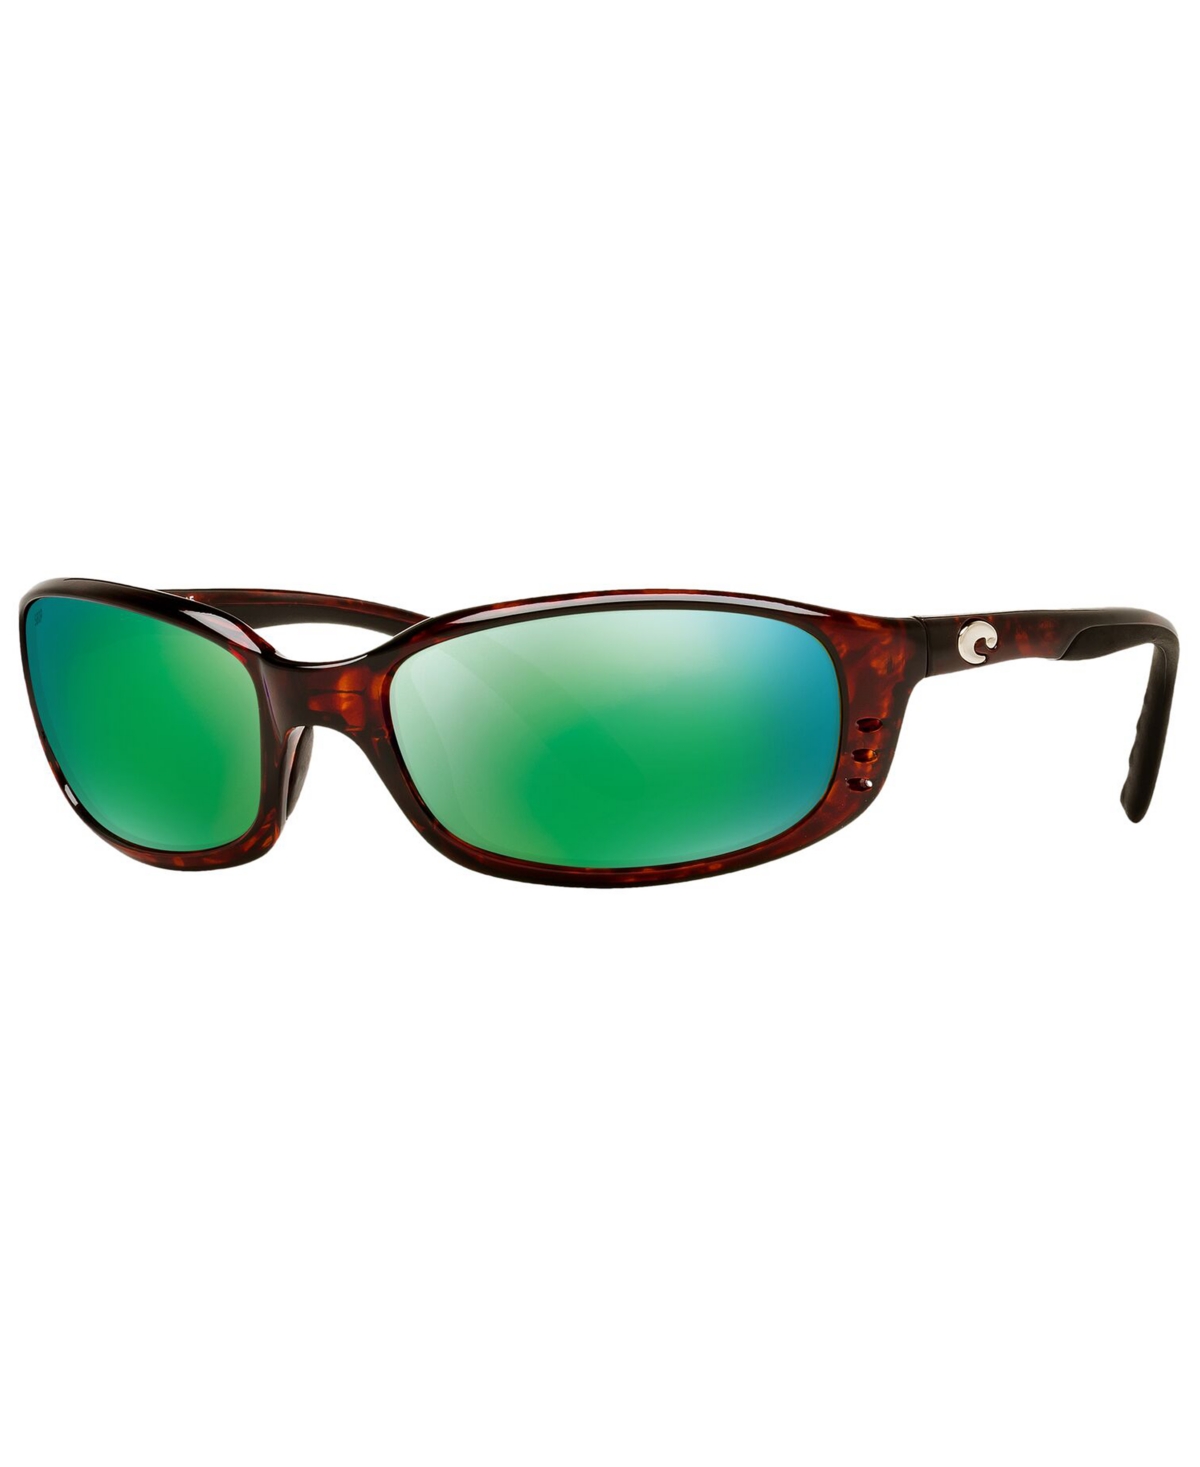 Polarized Sunglasses, Brine 06S000004 59P - TORTOISE/GREEN MIR POL